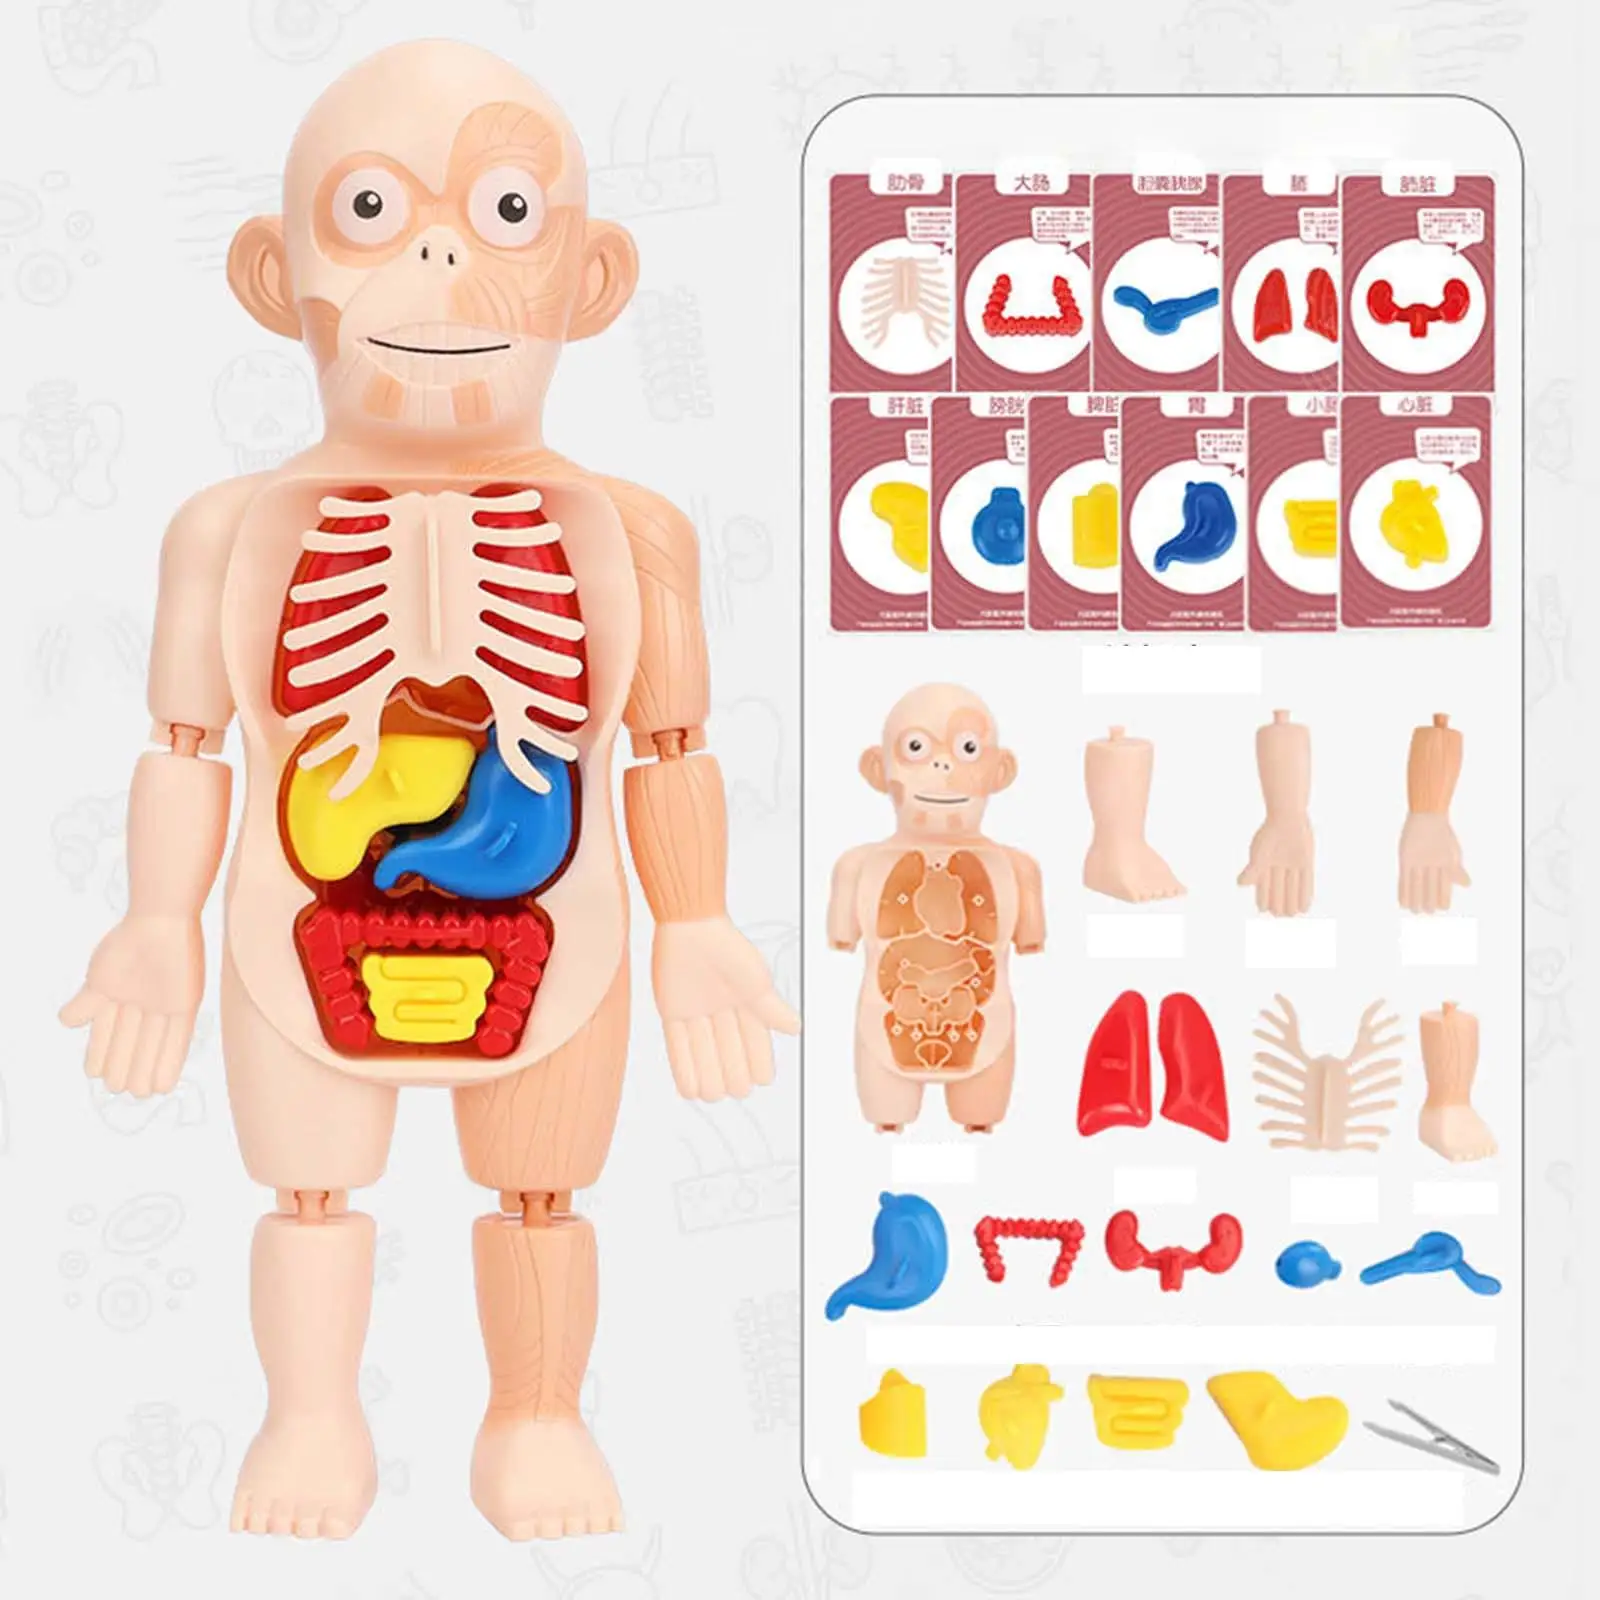  Human Body Organ Teaching Tools Assembly DIY Toys 3D Human Body Torso Model for Student  Demonstration